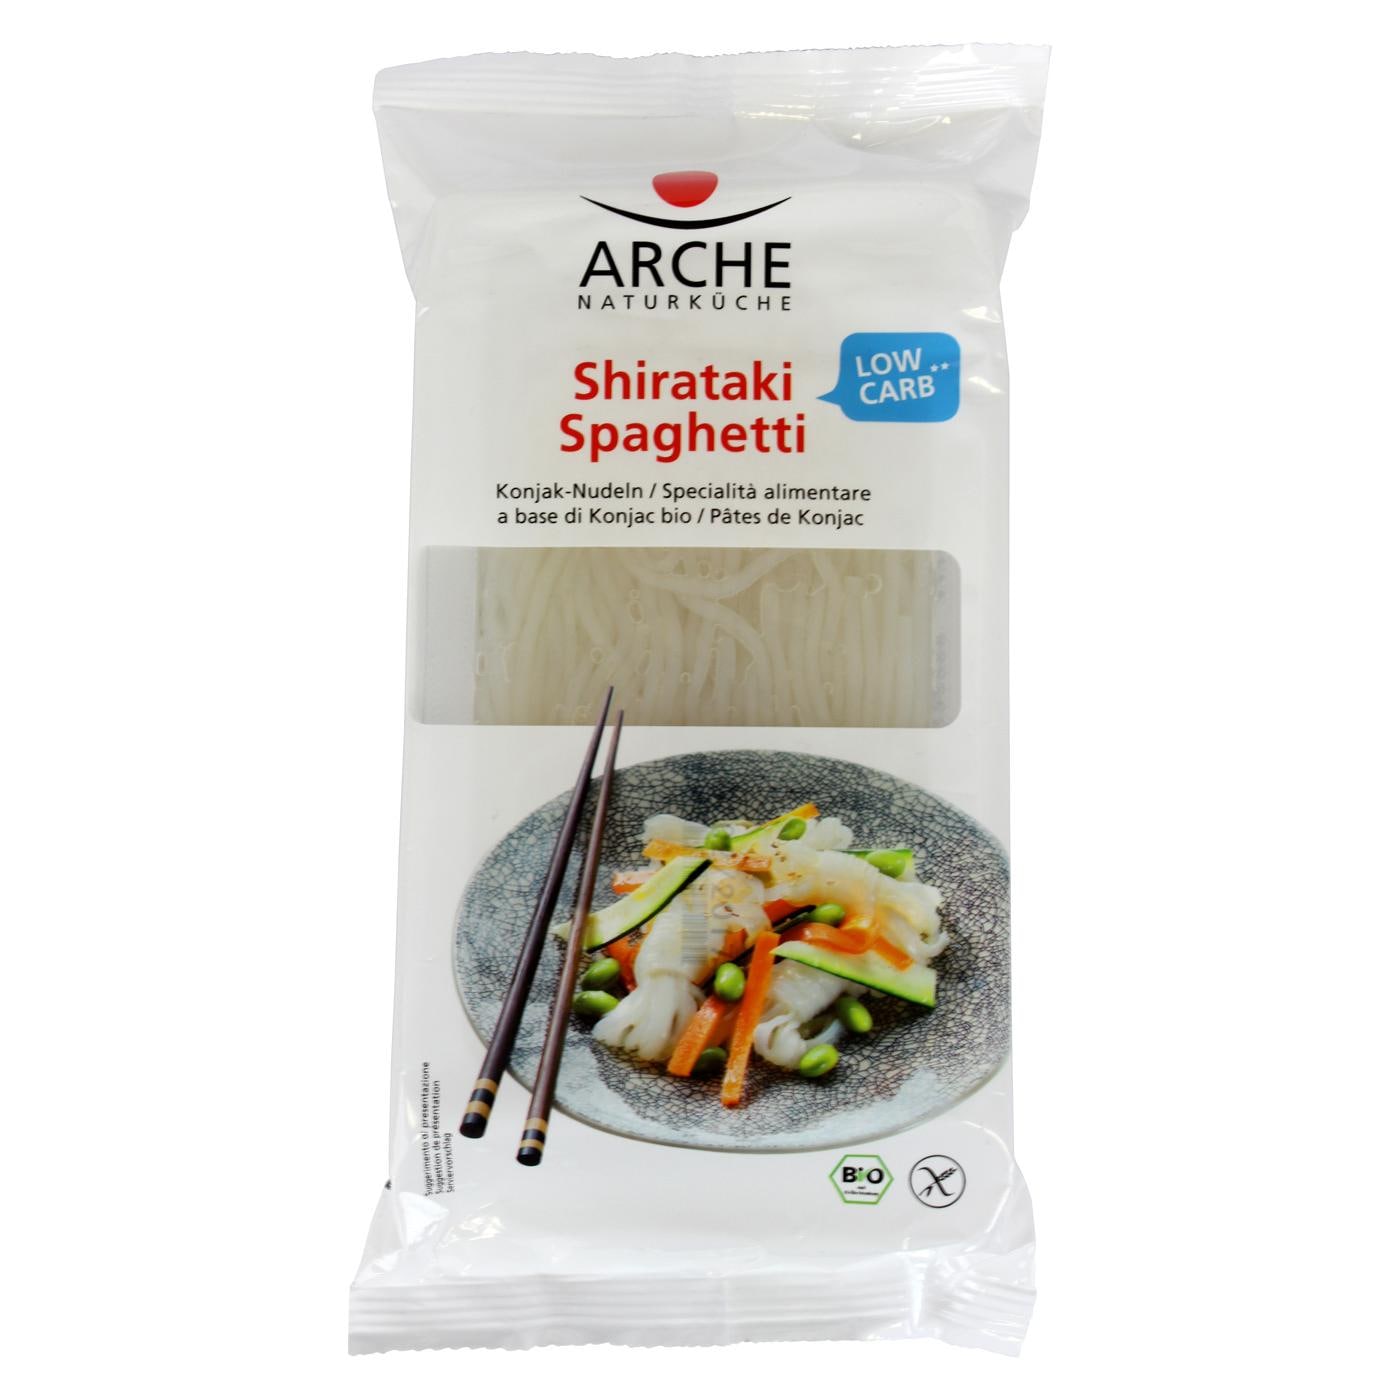 Arche Bio Shirataki Spaghetti Konjak Nudeln Glutenfrei 294g Bei Rewe Online Bestellen